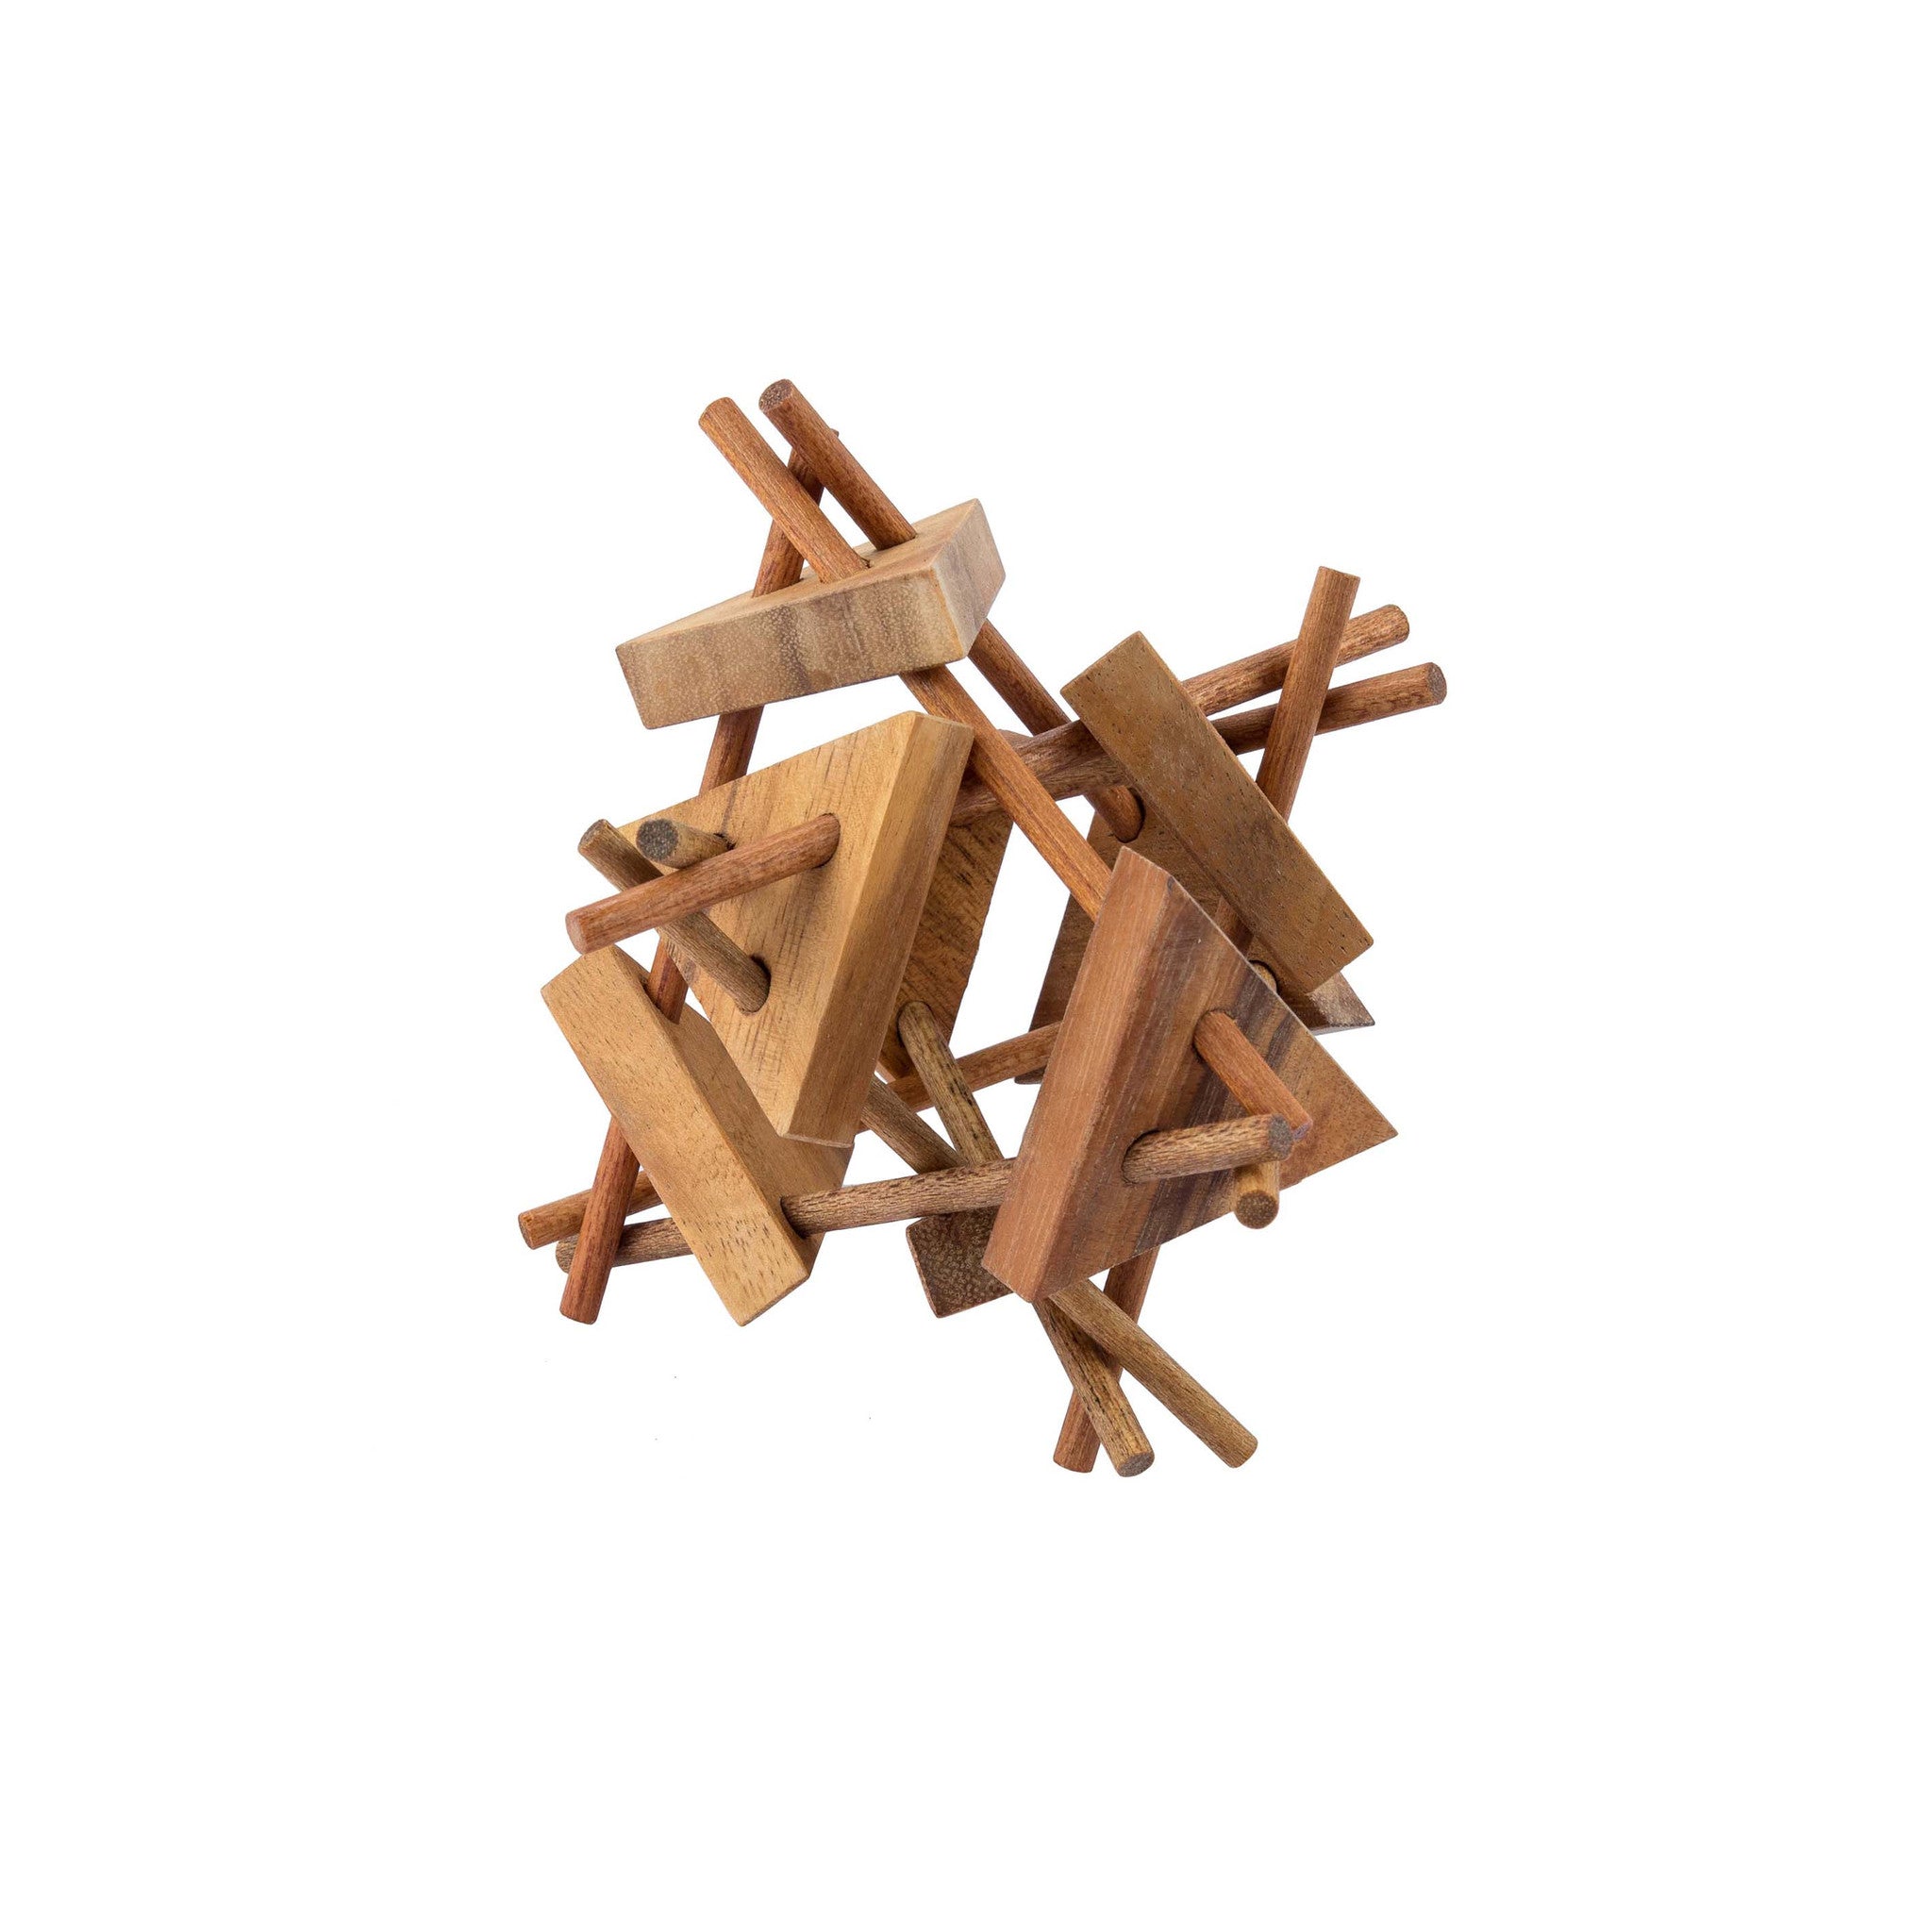 .com: ArtCreativity Wooden Tangram Puzzles for Kids, Set of